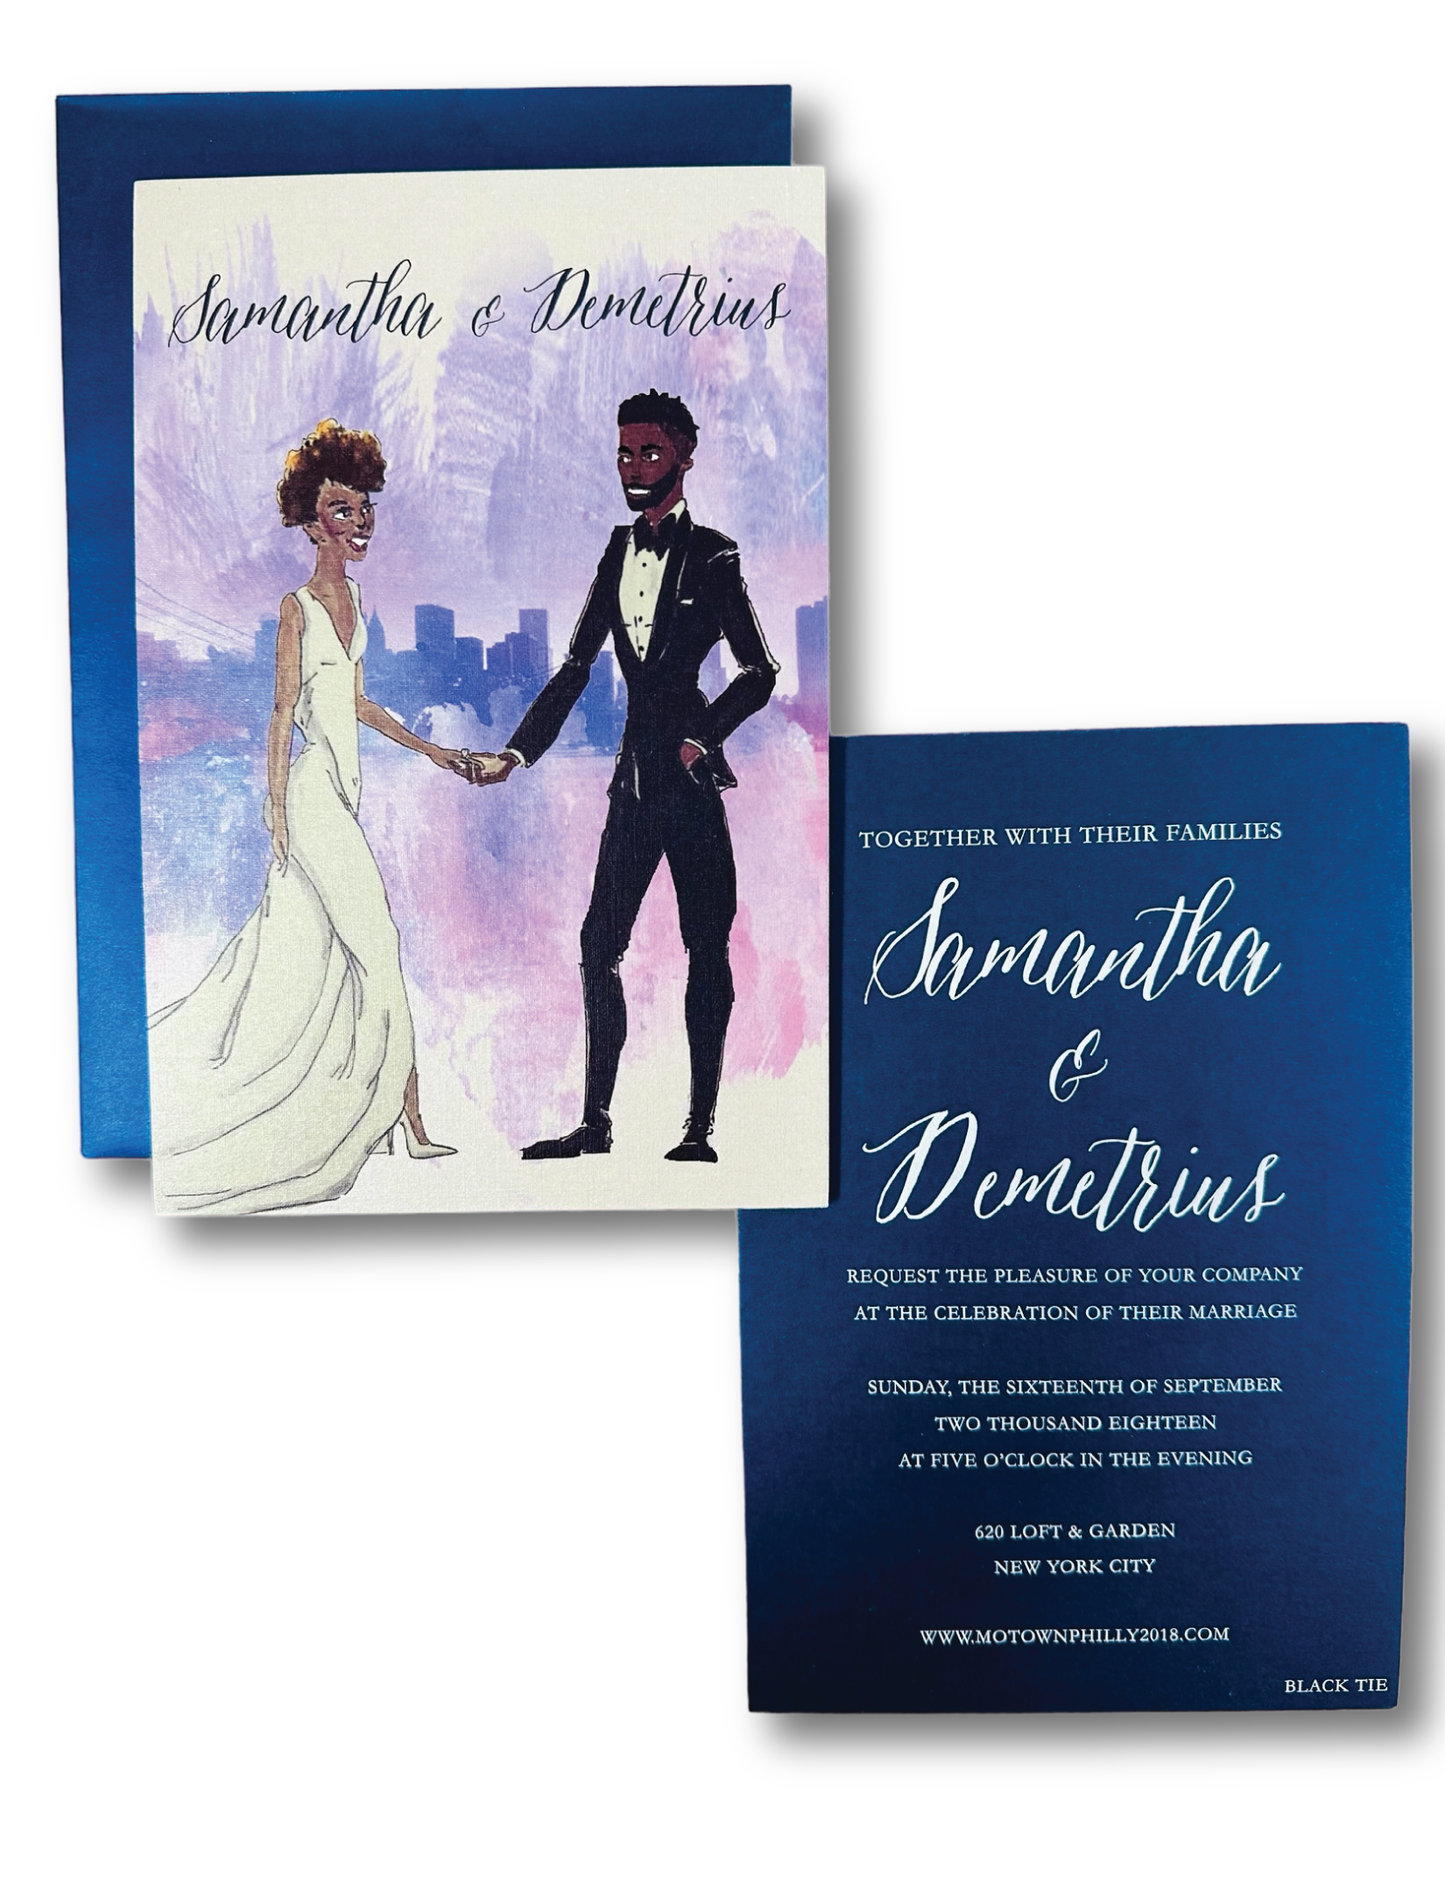 SAMANTHA AND DEMETRIUS'S WEDDING